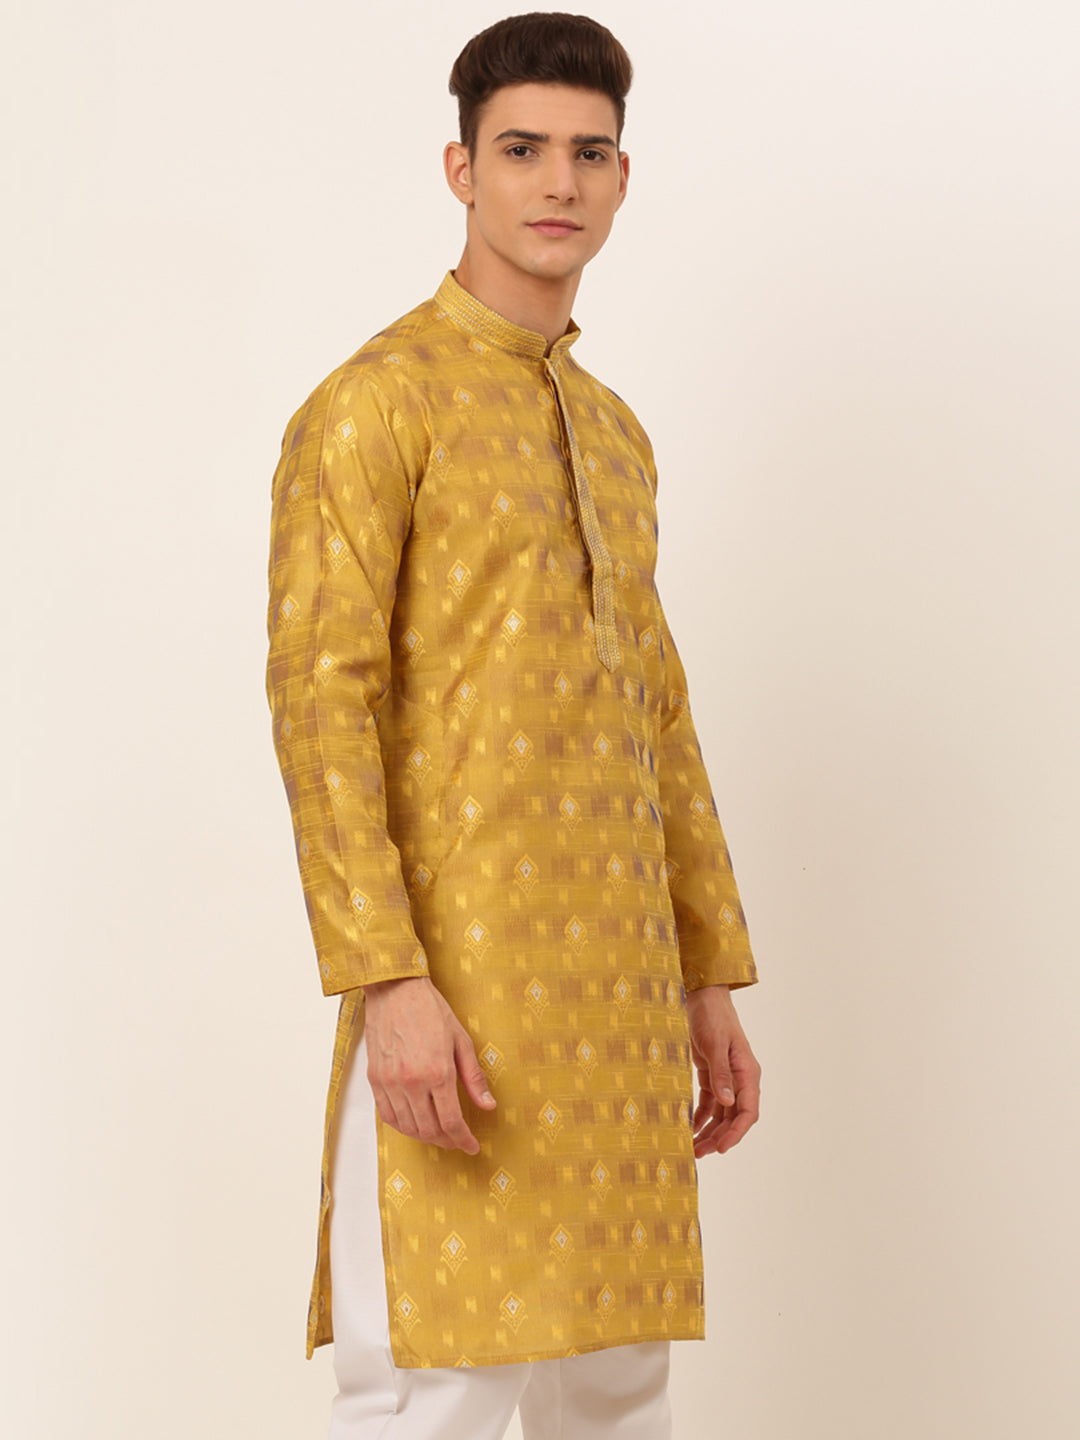 Jompers Men's Mustard Collar Embroidered Woven Design Kurta Pajama